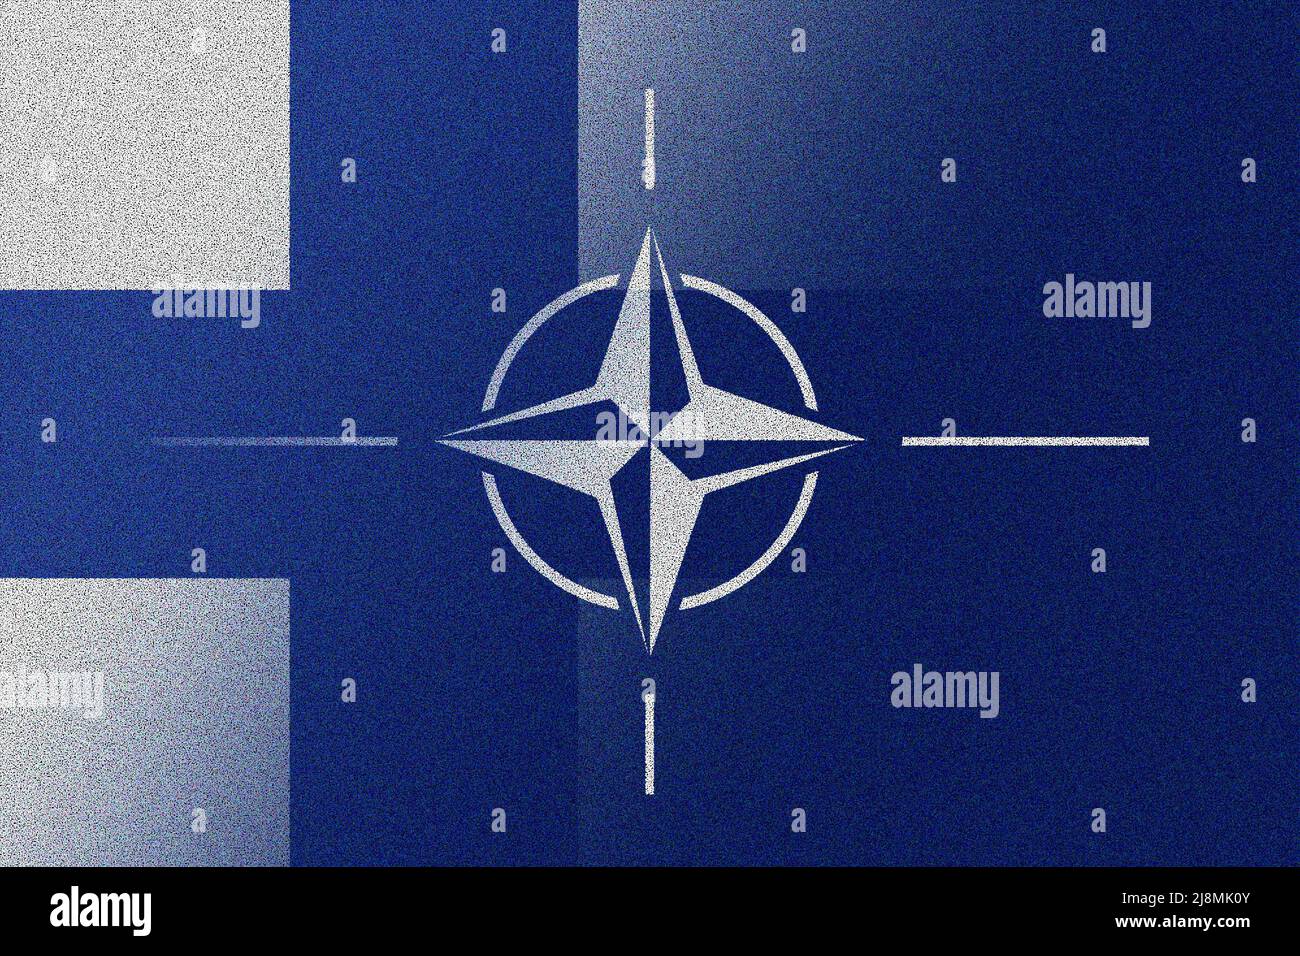 NATO-OTAN. Finland. NATO flag. Finland flag. Flag with the NATO logo. Concept of annexation of Finland with NATO-OTAN. Foreground. Horizontal layout. Stock Photo